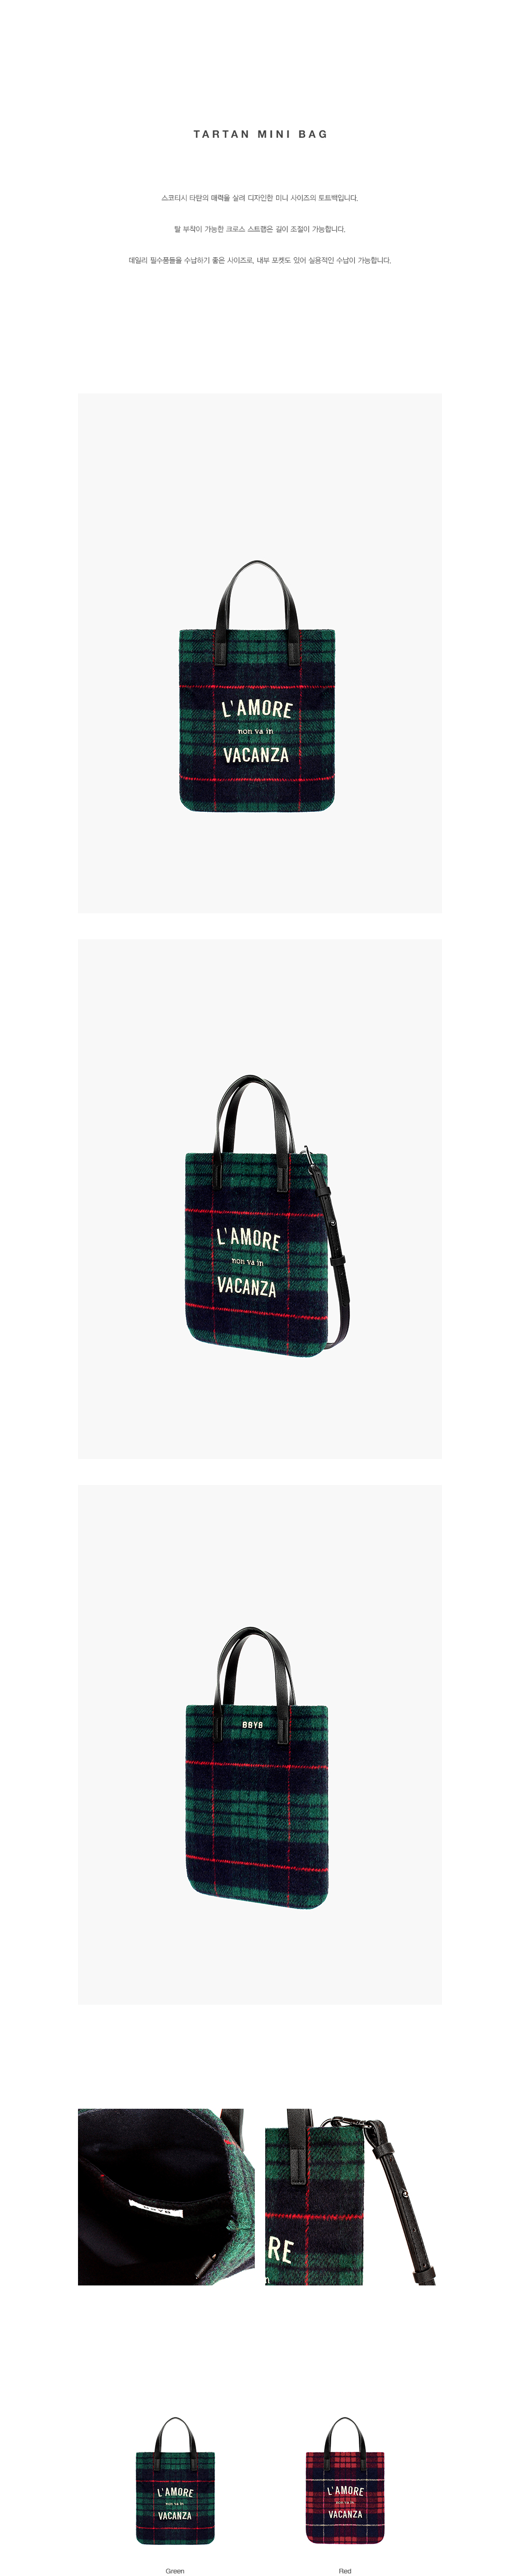 BBYB 우주소녀 유연정 착용 Tartan Mini Bag (Green)